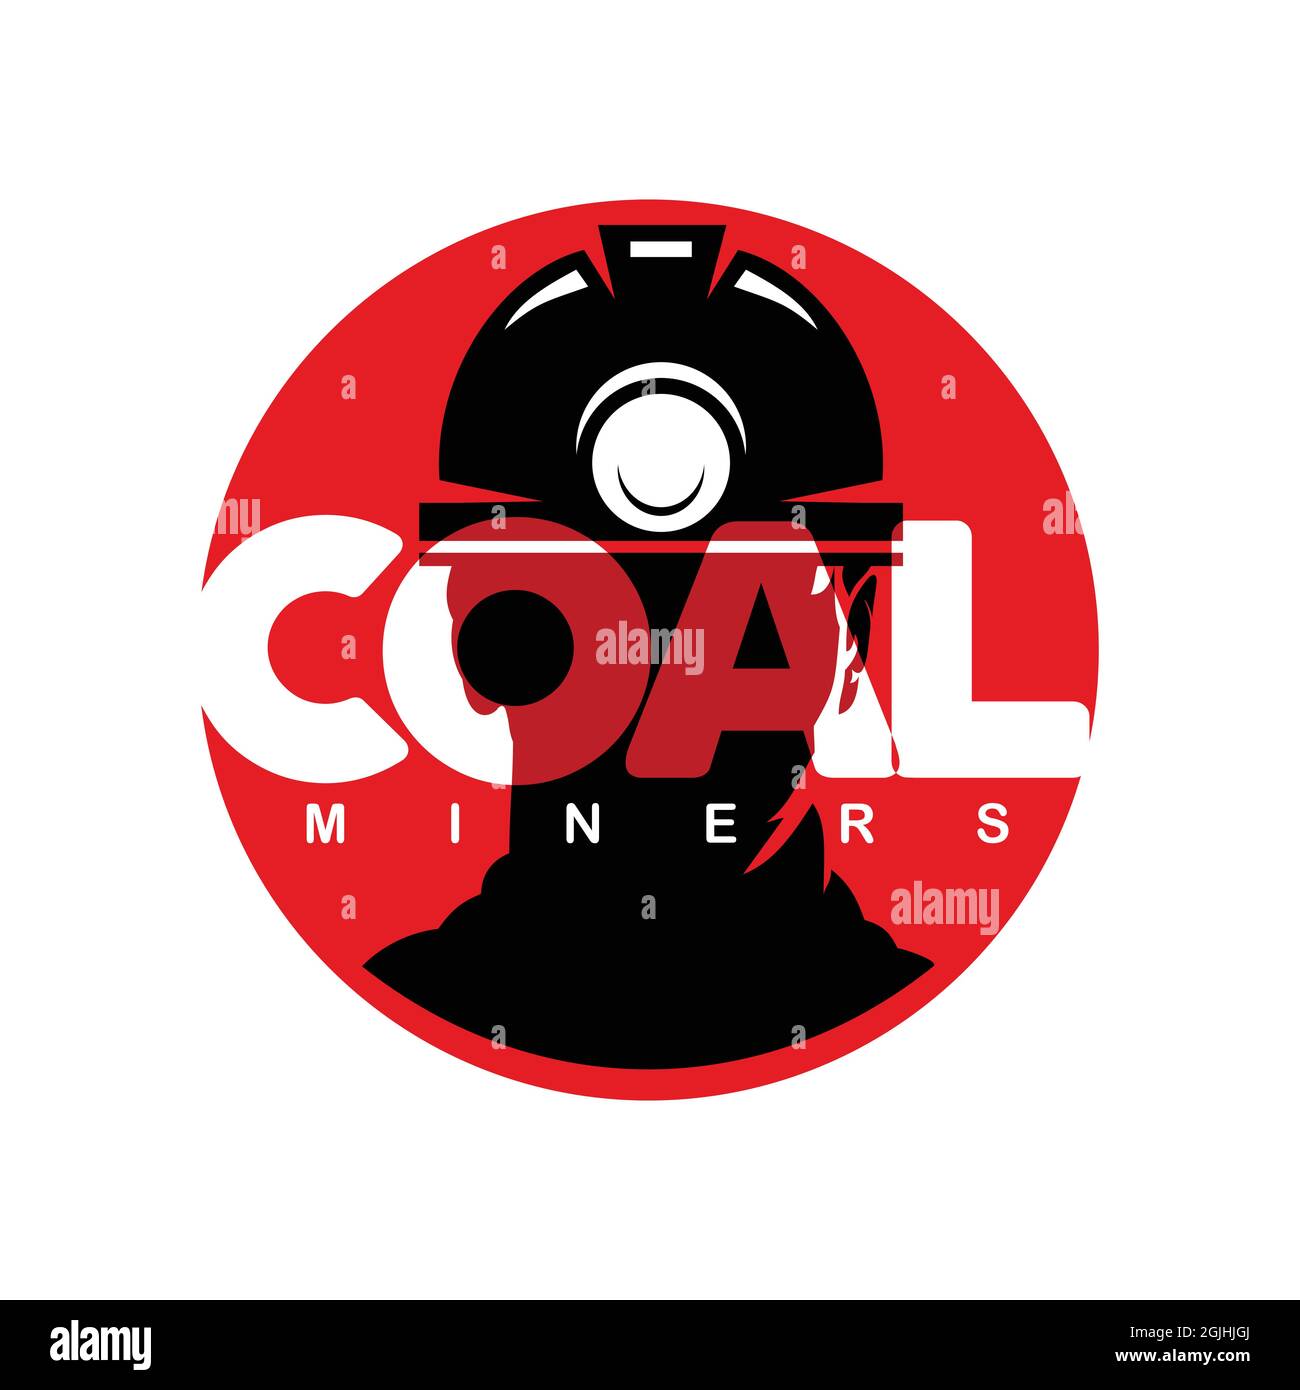 logo design for mining purposes Stock Vector